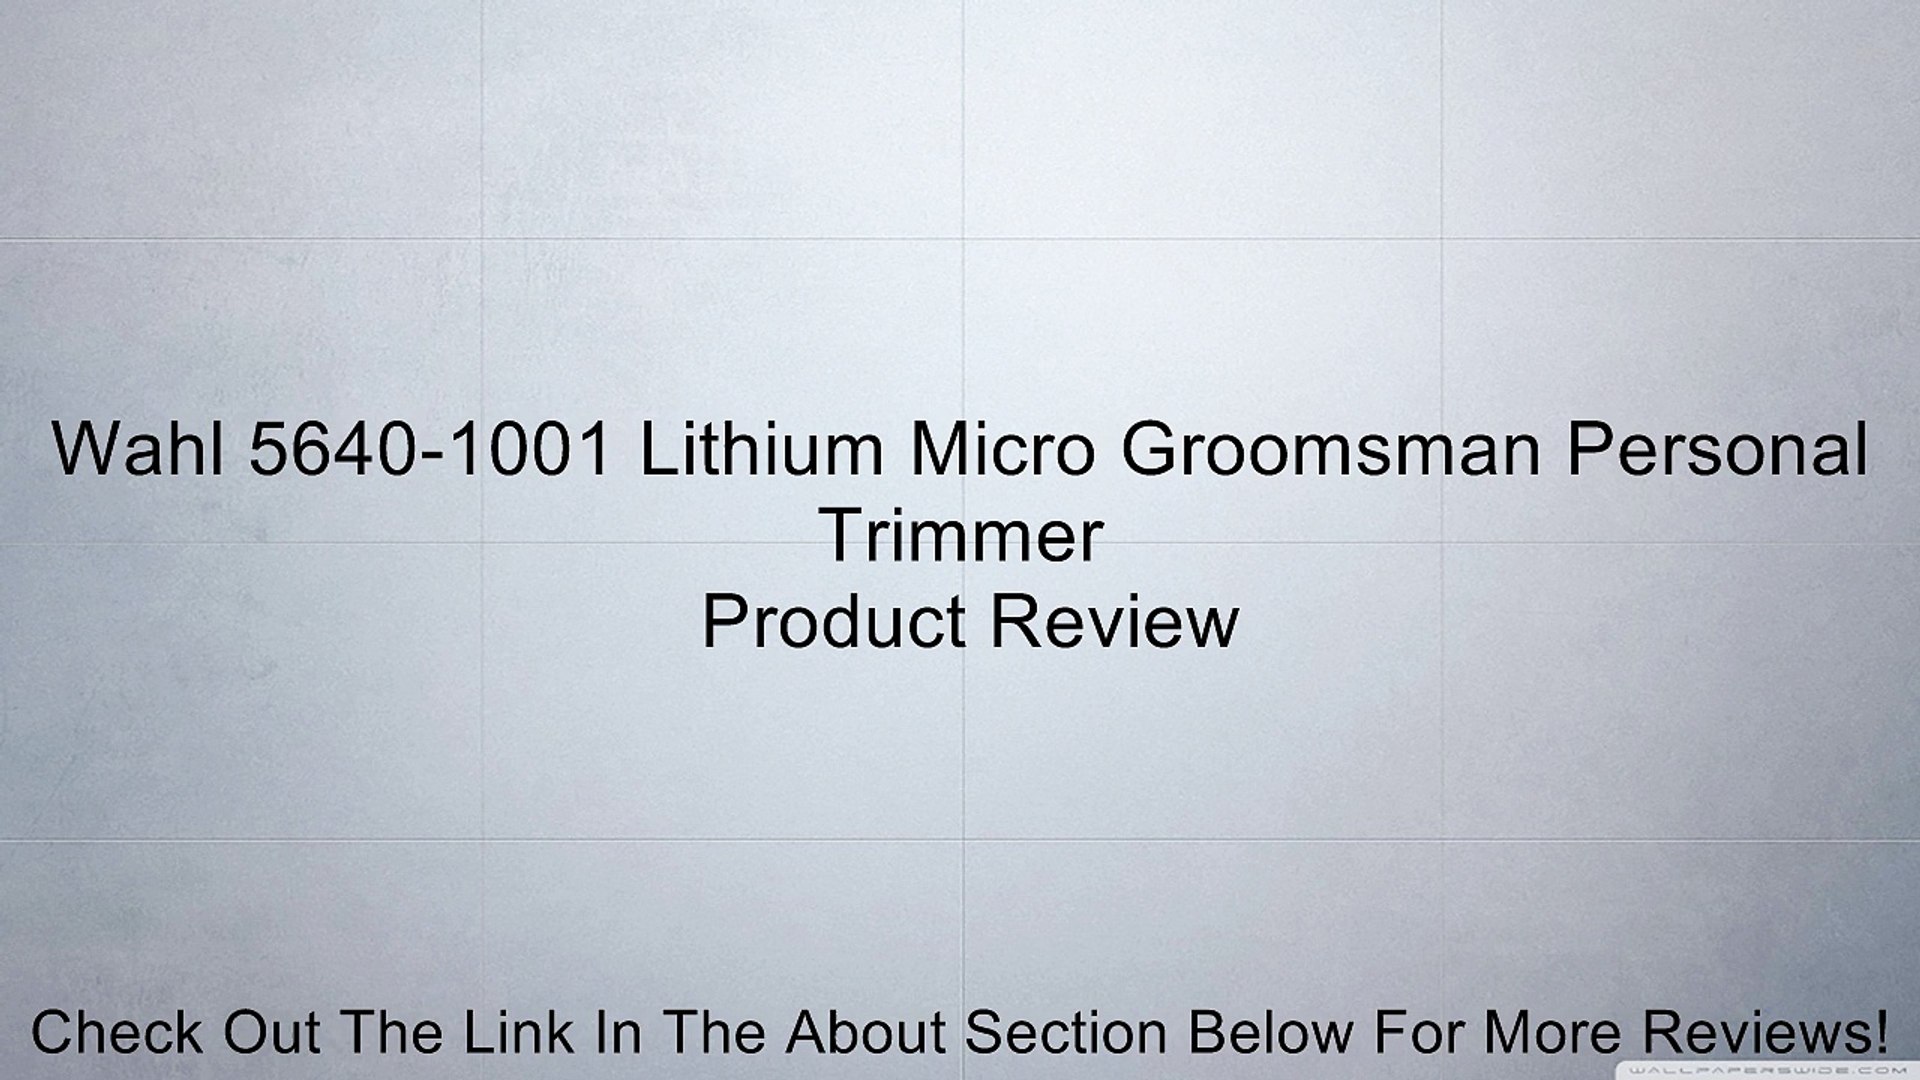 wahl micro groomsman lithium pen trimmer reviews